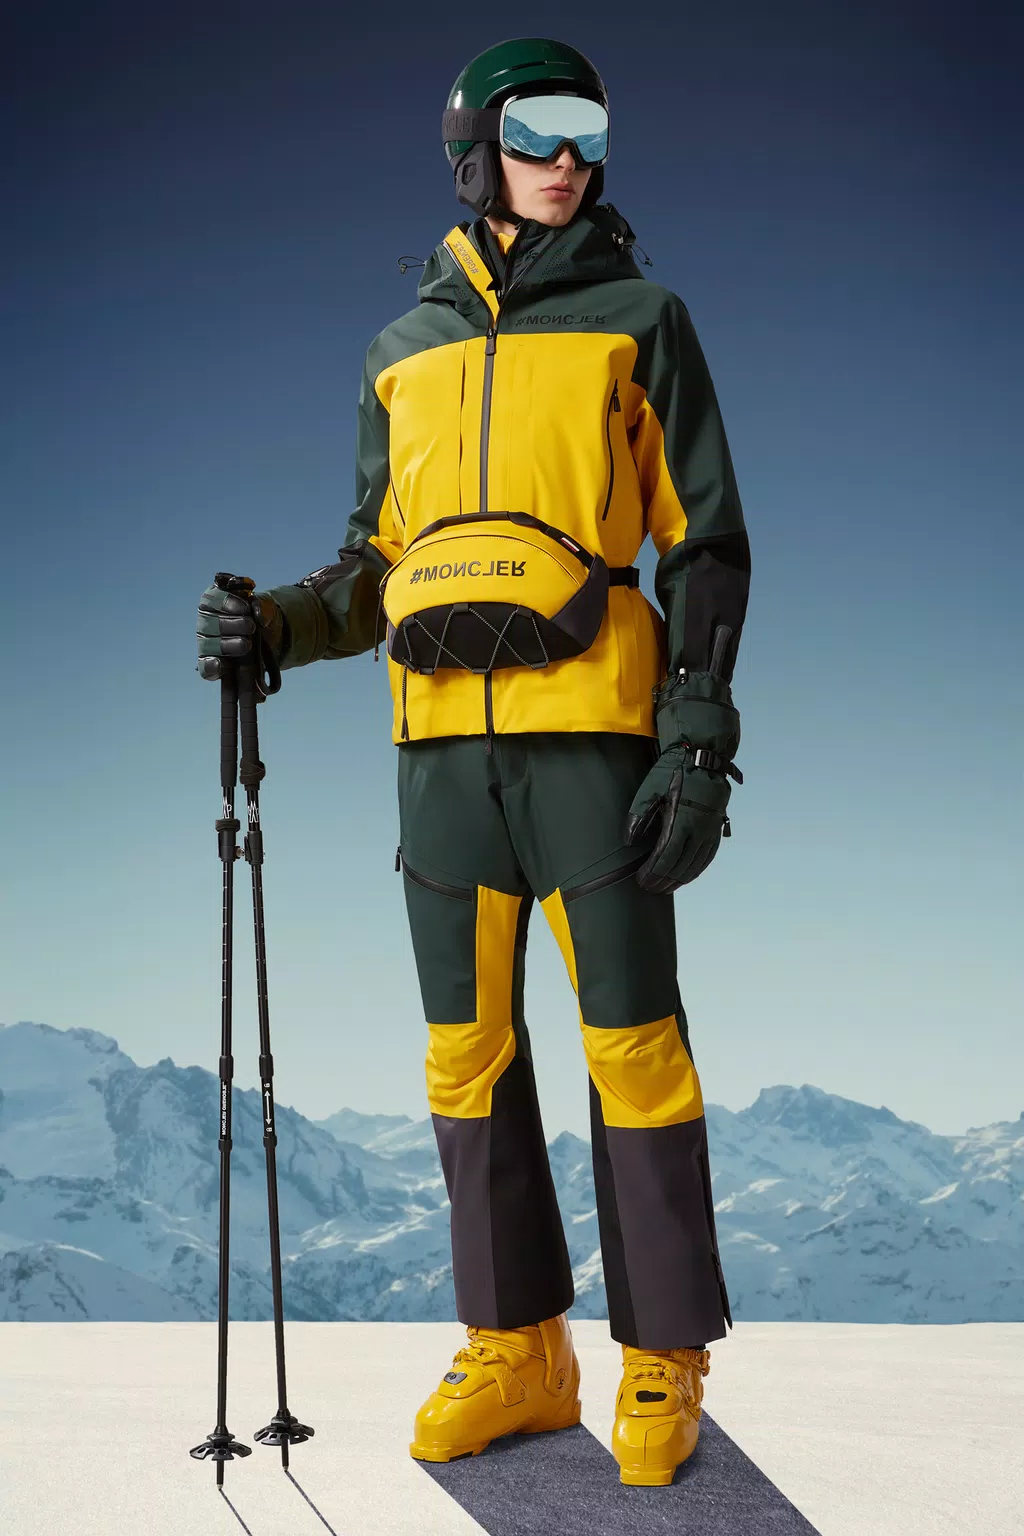 Brizon Ski-Jacke Herren Gelb & Grün Moncler 1